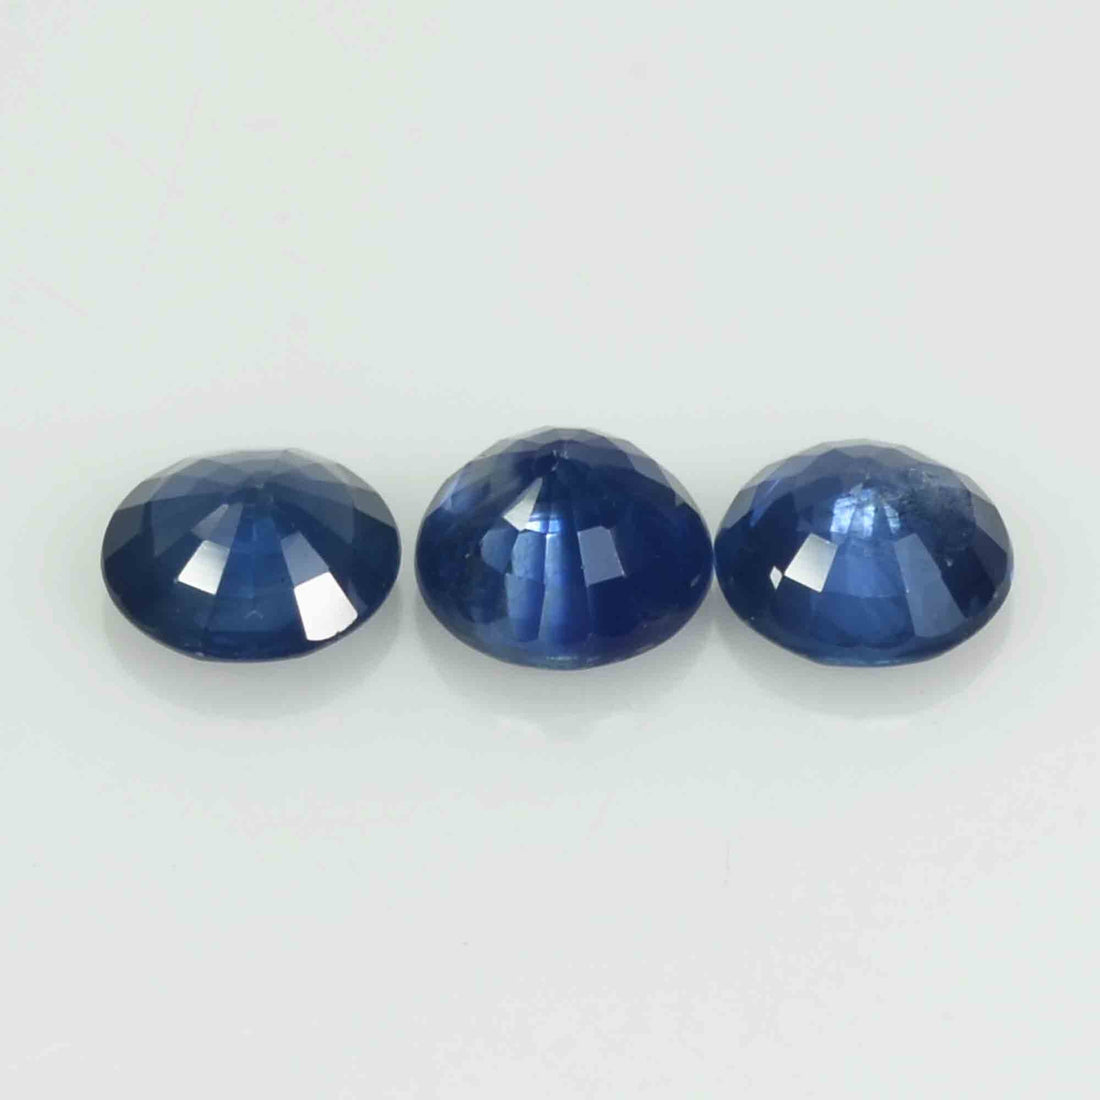 4.9-5.8 MM Natural Blue Sapphire Loose Gemstone Round Cut